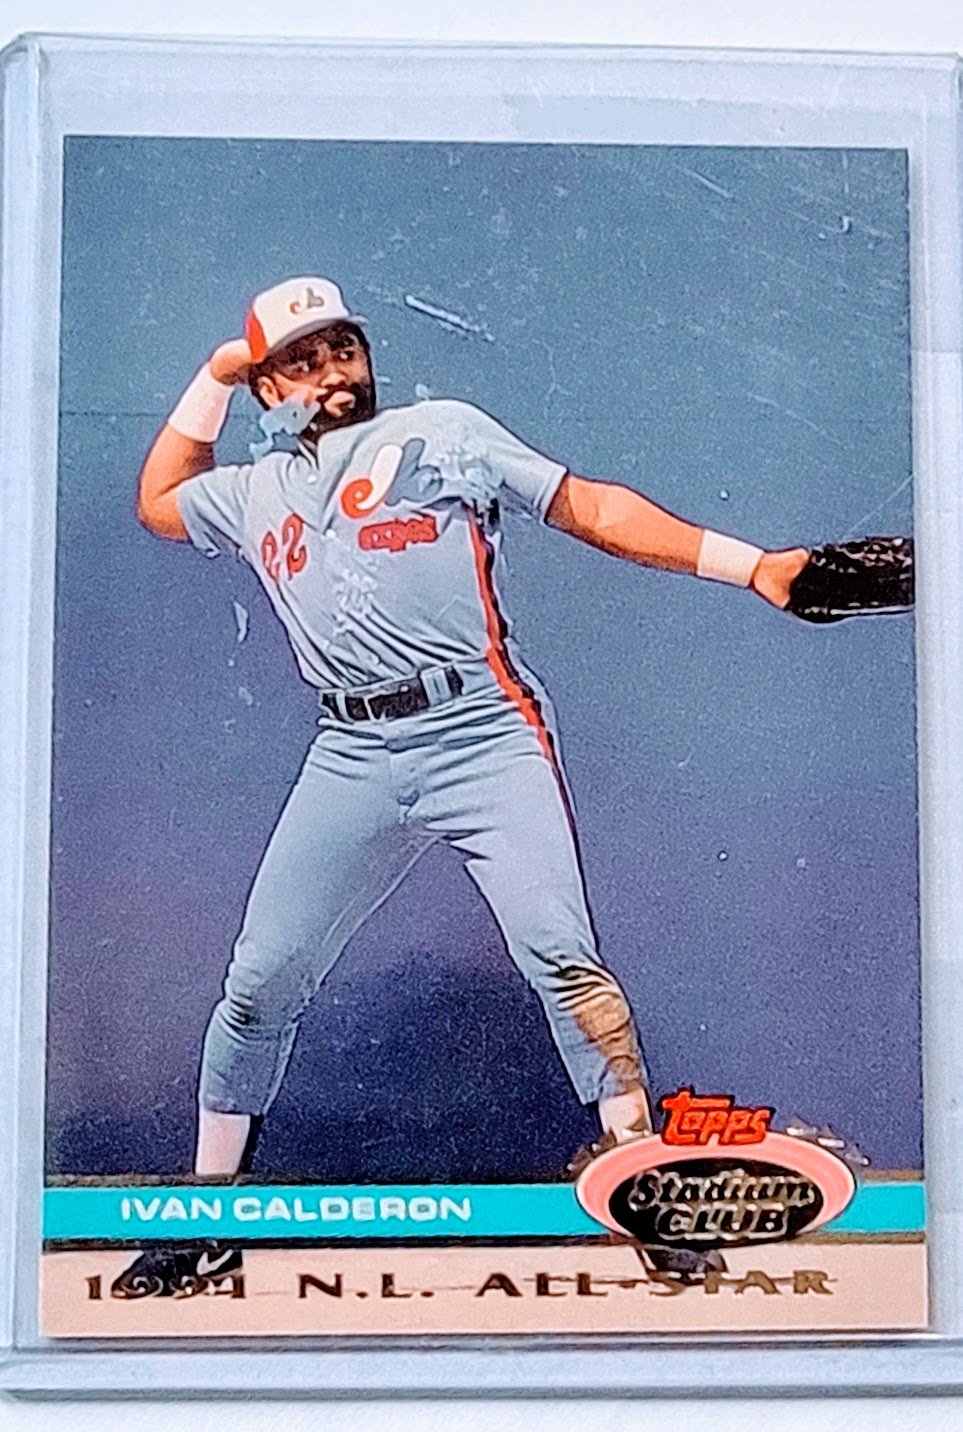 1992 Topps Stadium Club Dome Ivan Calderon 1991 All Star MLB Baseball Trading Card TPTV simple Xclusive Collectibles   